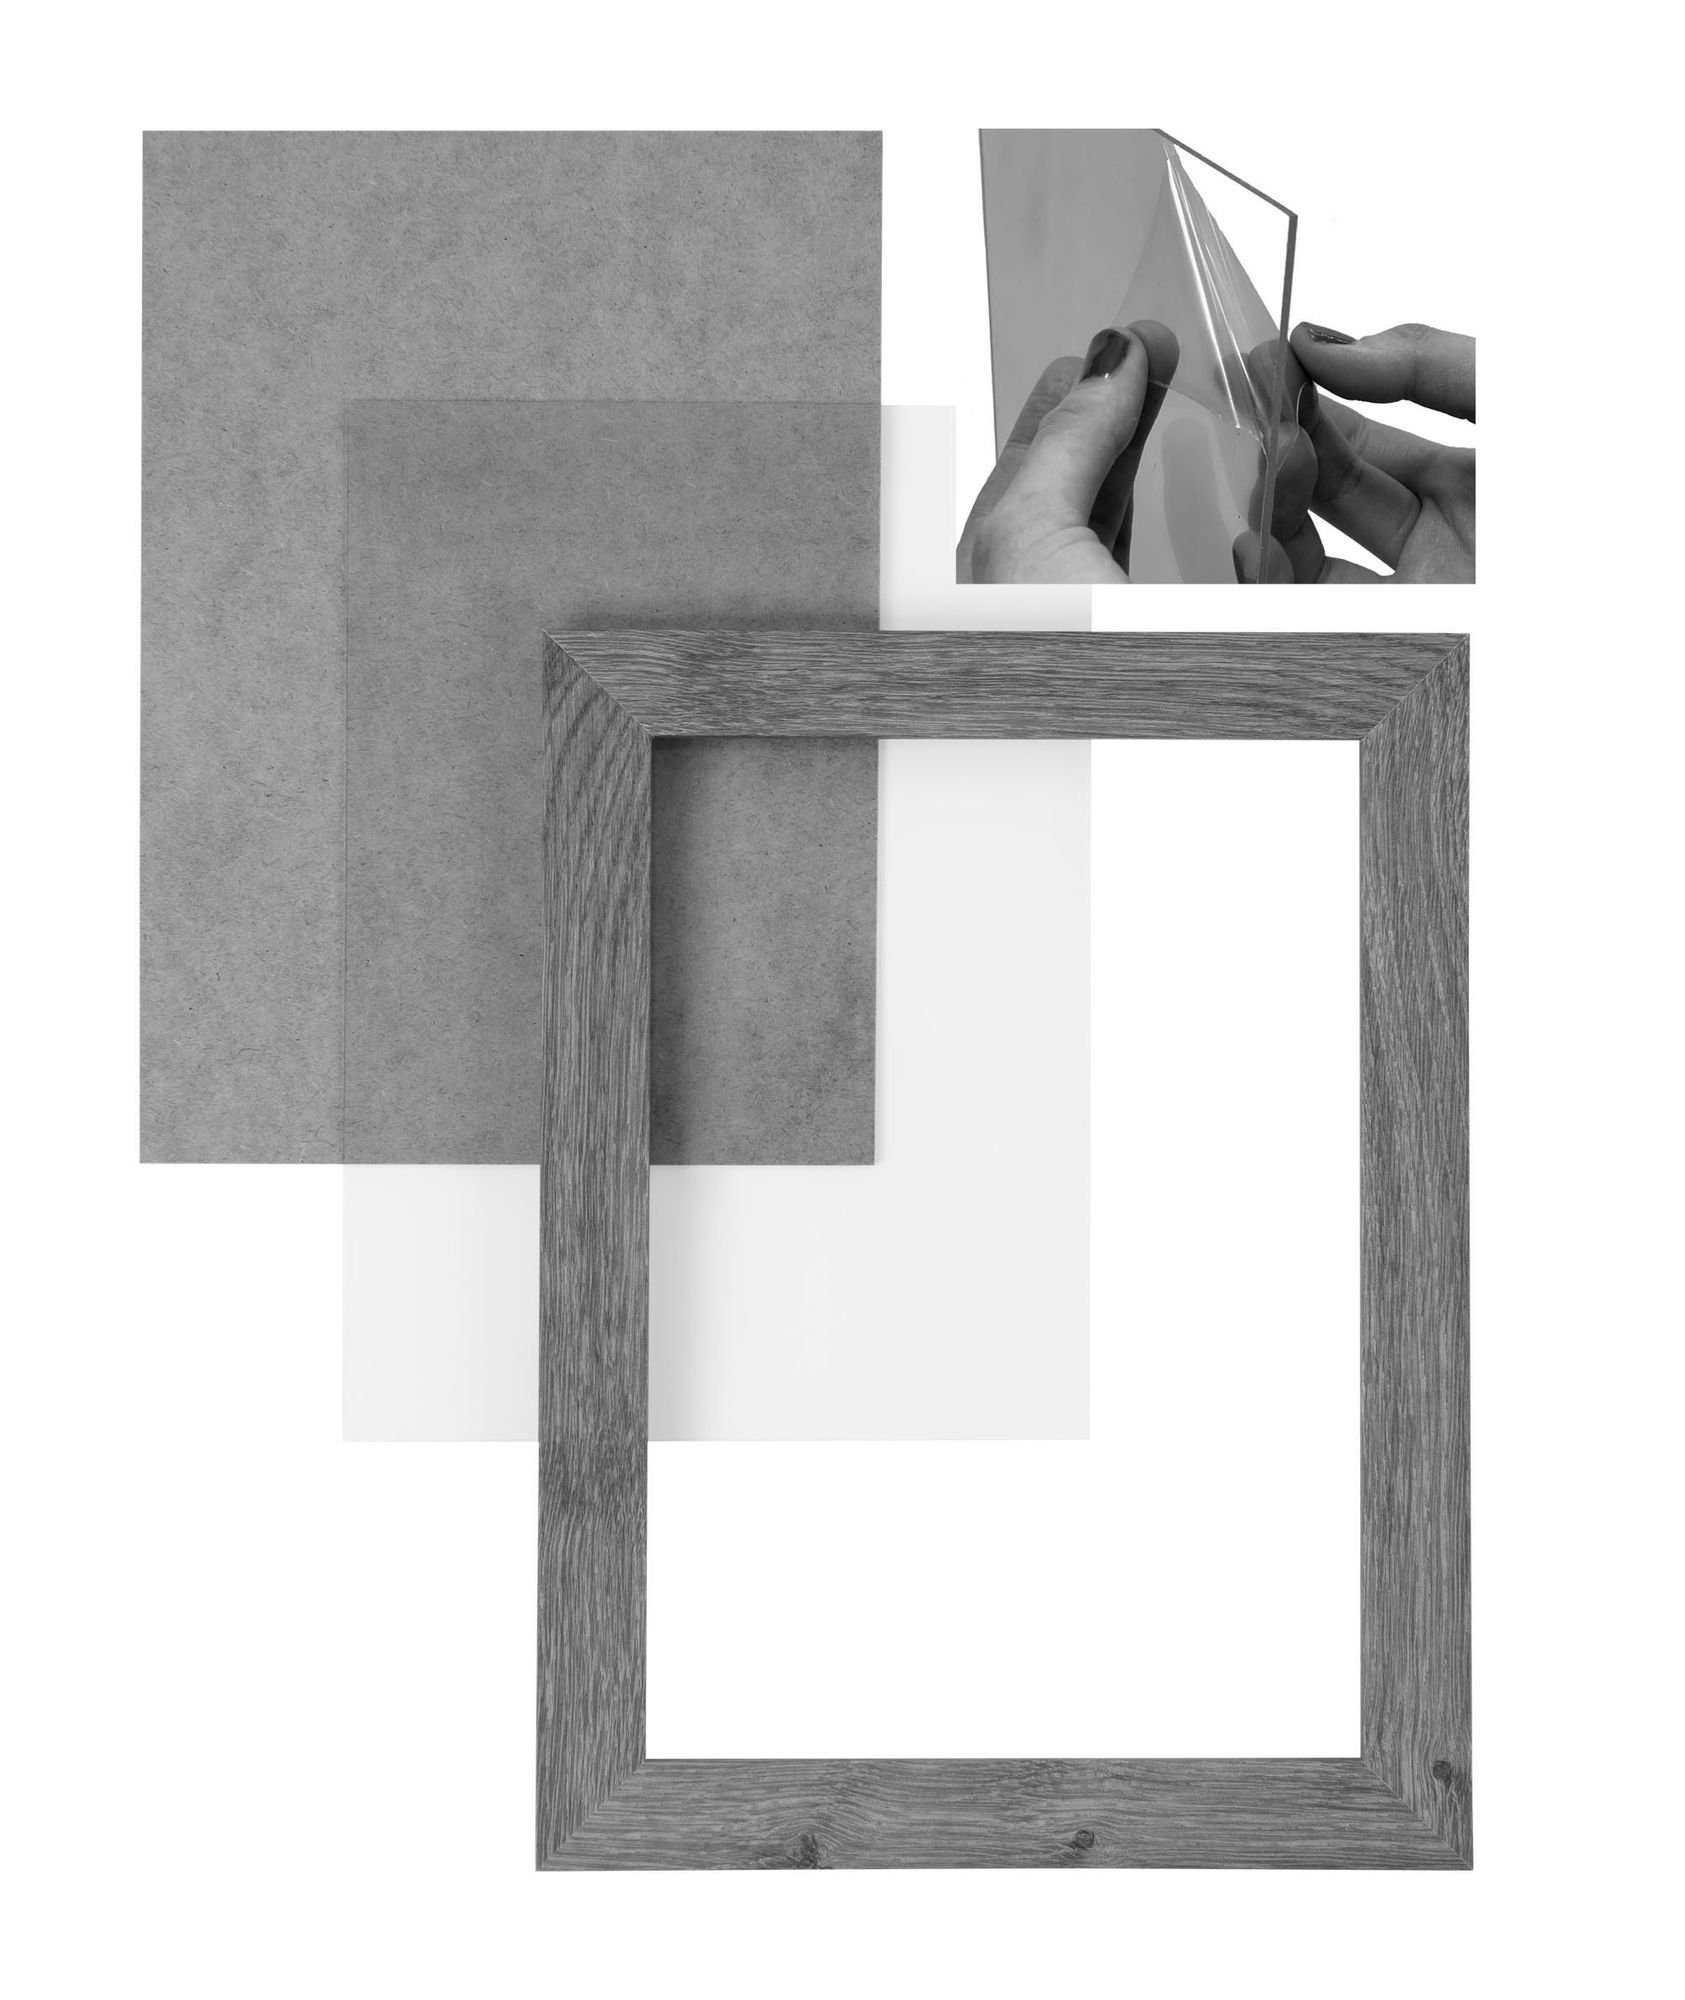 Moderner FSC® in sonama MDF eckiger Maß 'Collage' Bilderrahmen handgefertigt Rückwand Rahmen Clamaro und inkl. Bilderrahmen CLAMARO nach 85x120 Aufhänger Acrylglas, eiche Holz